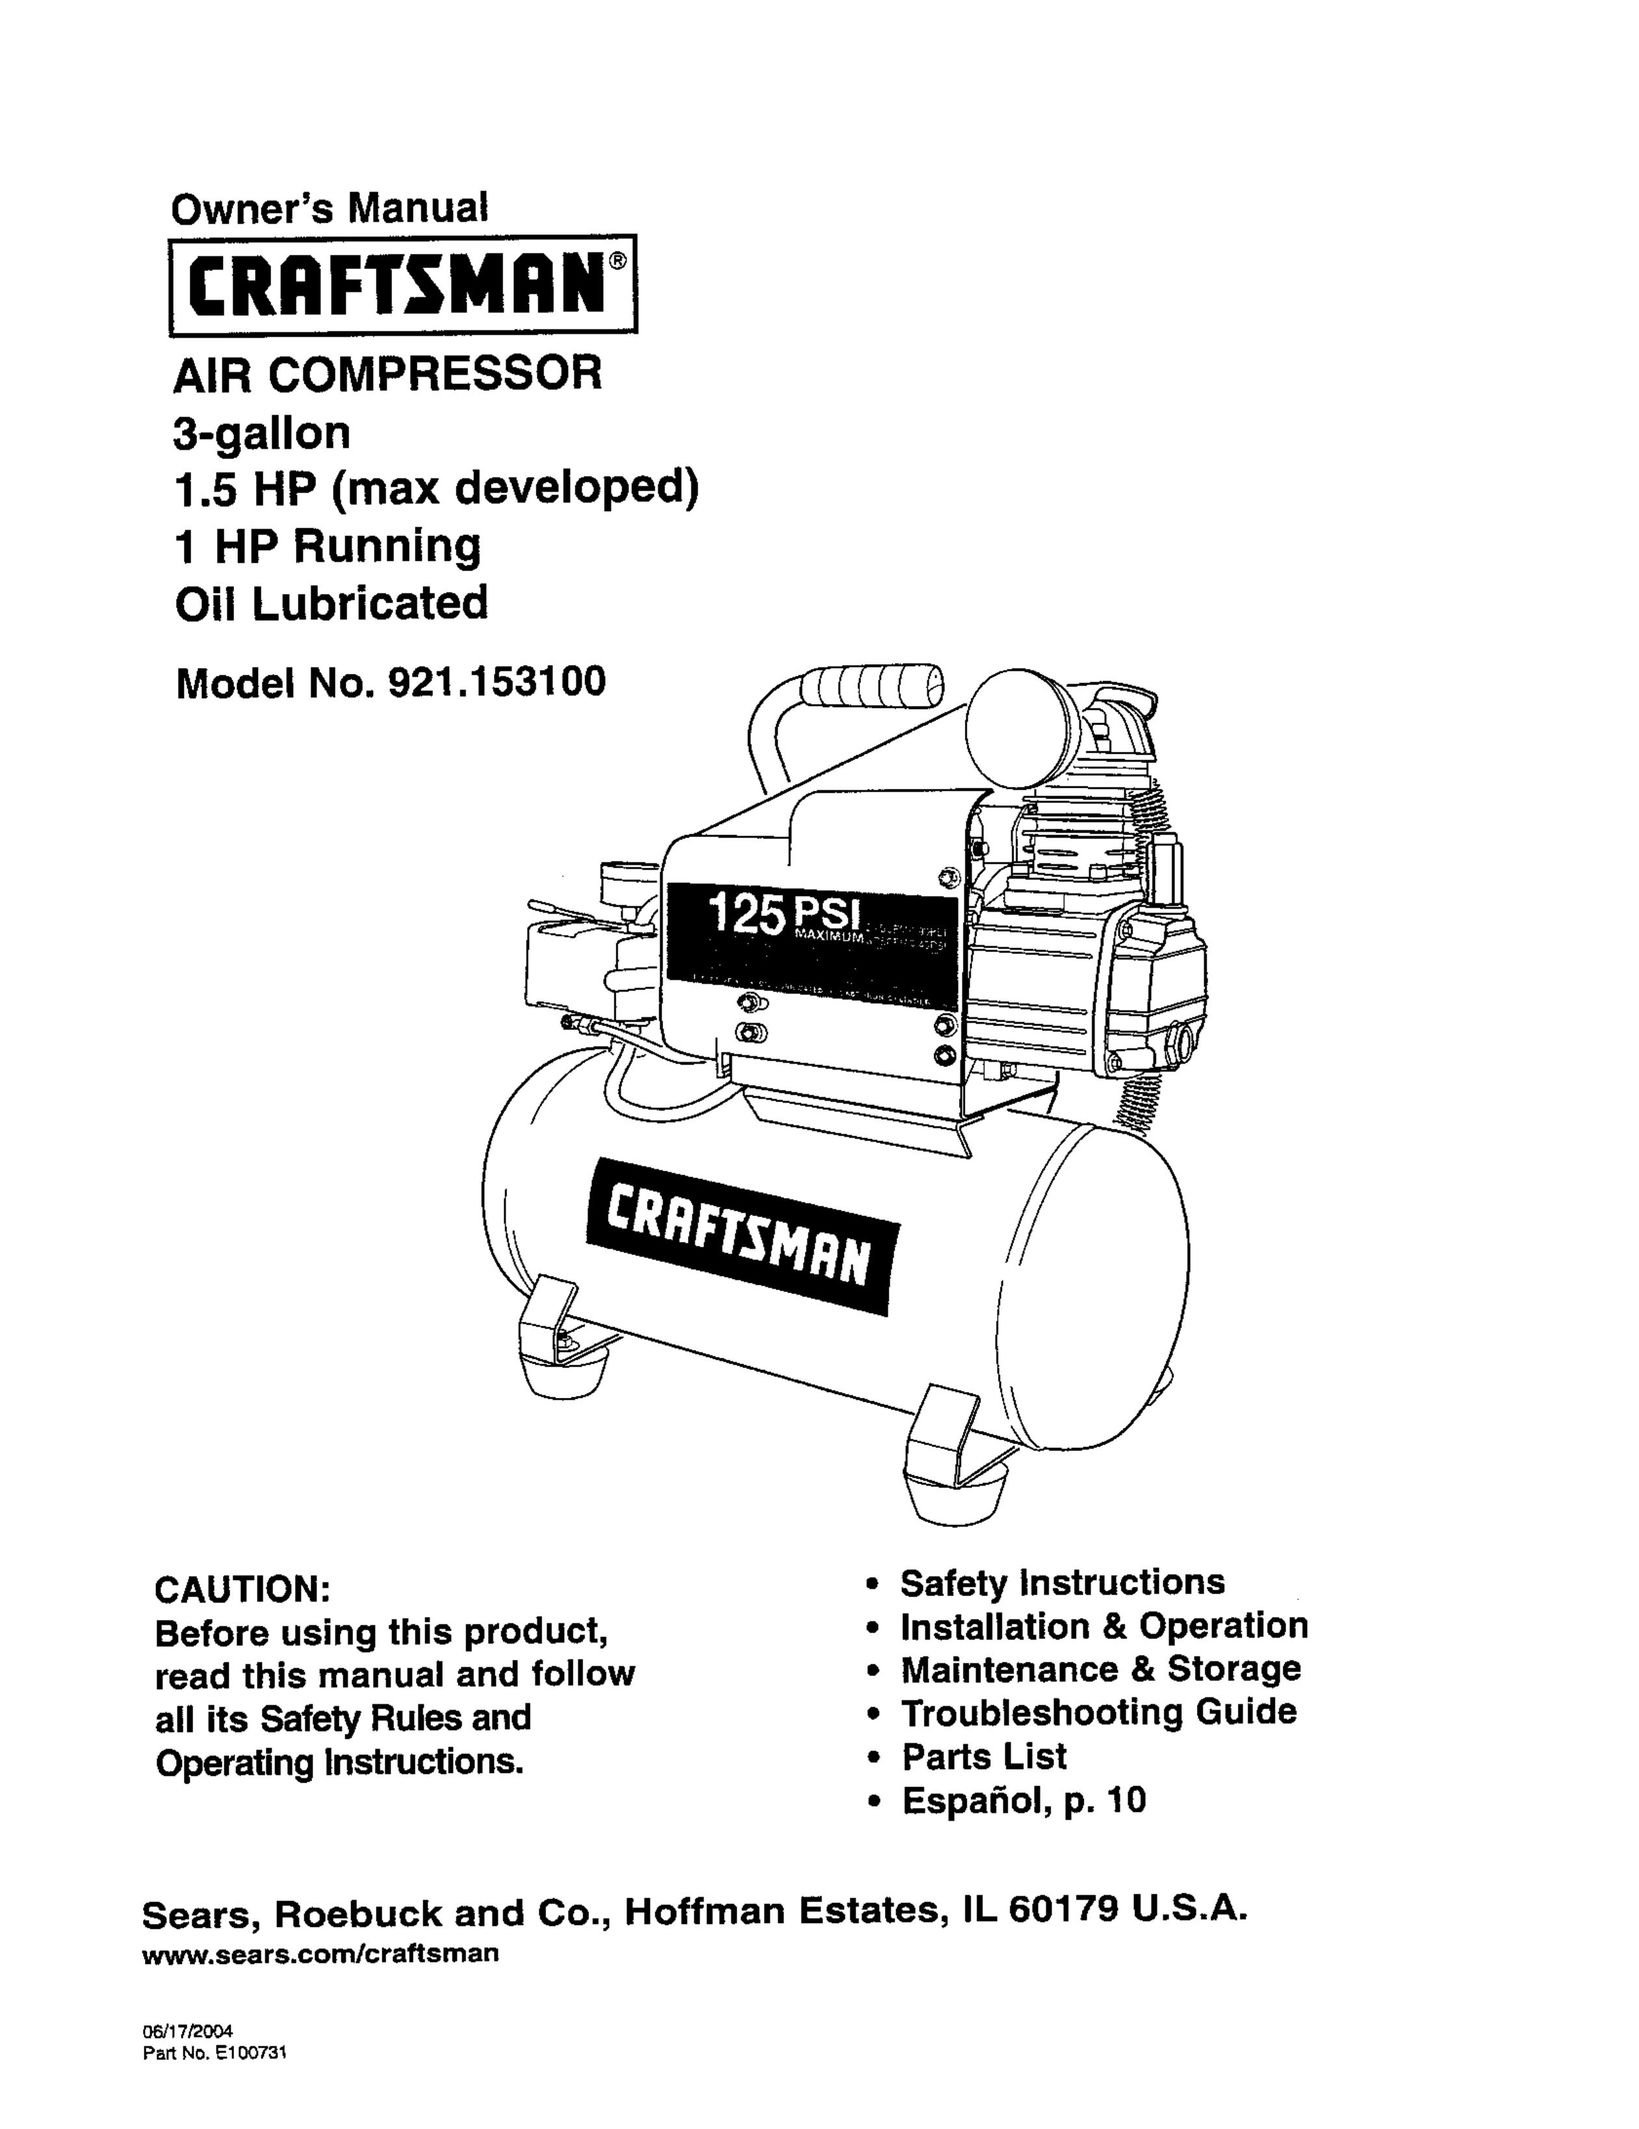 Craftsman 921.1531 Air Compressor User Manual